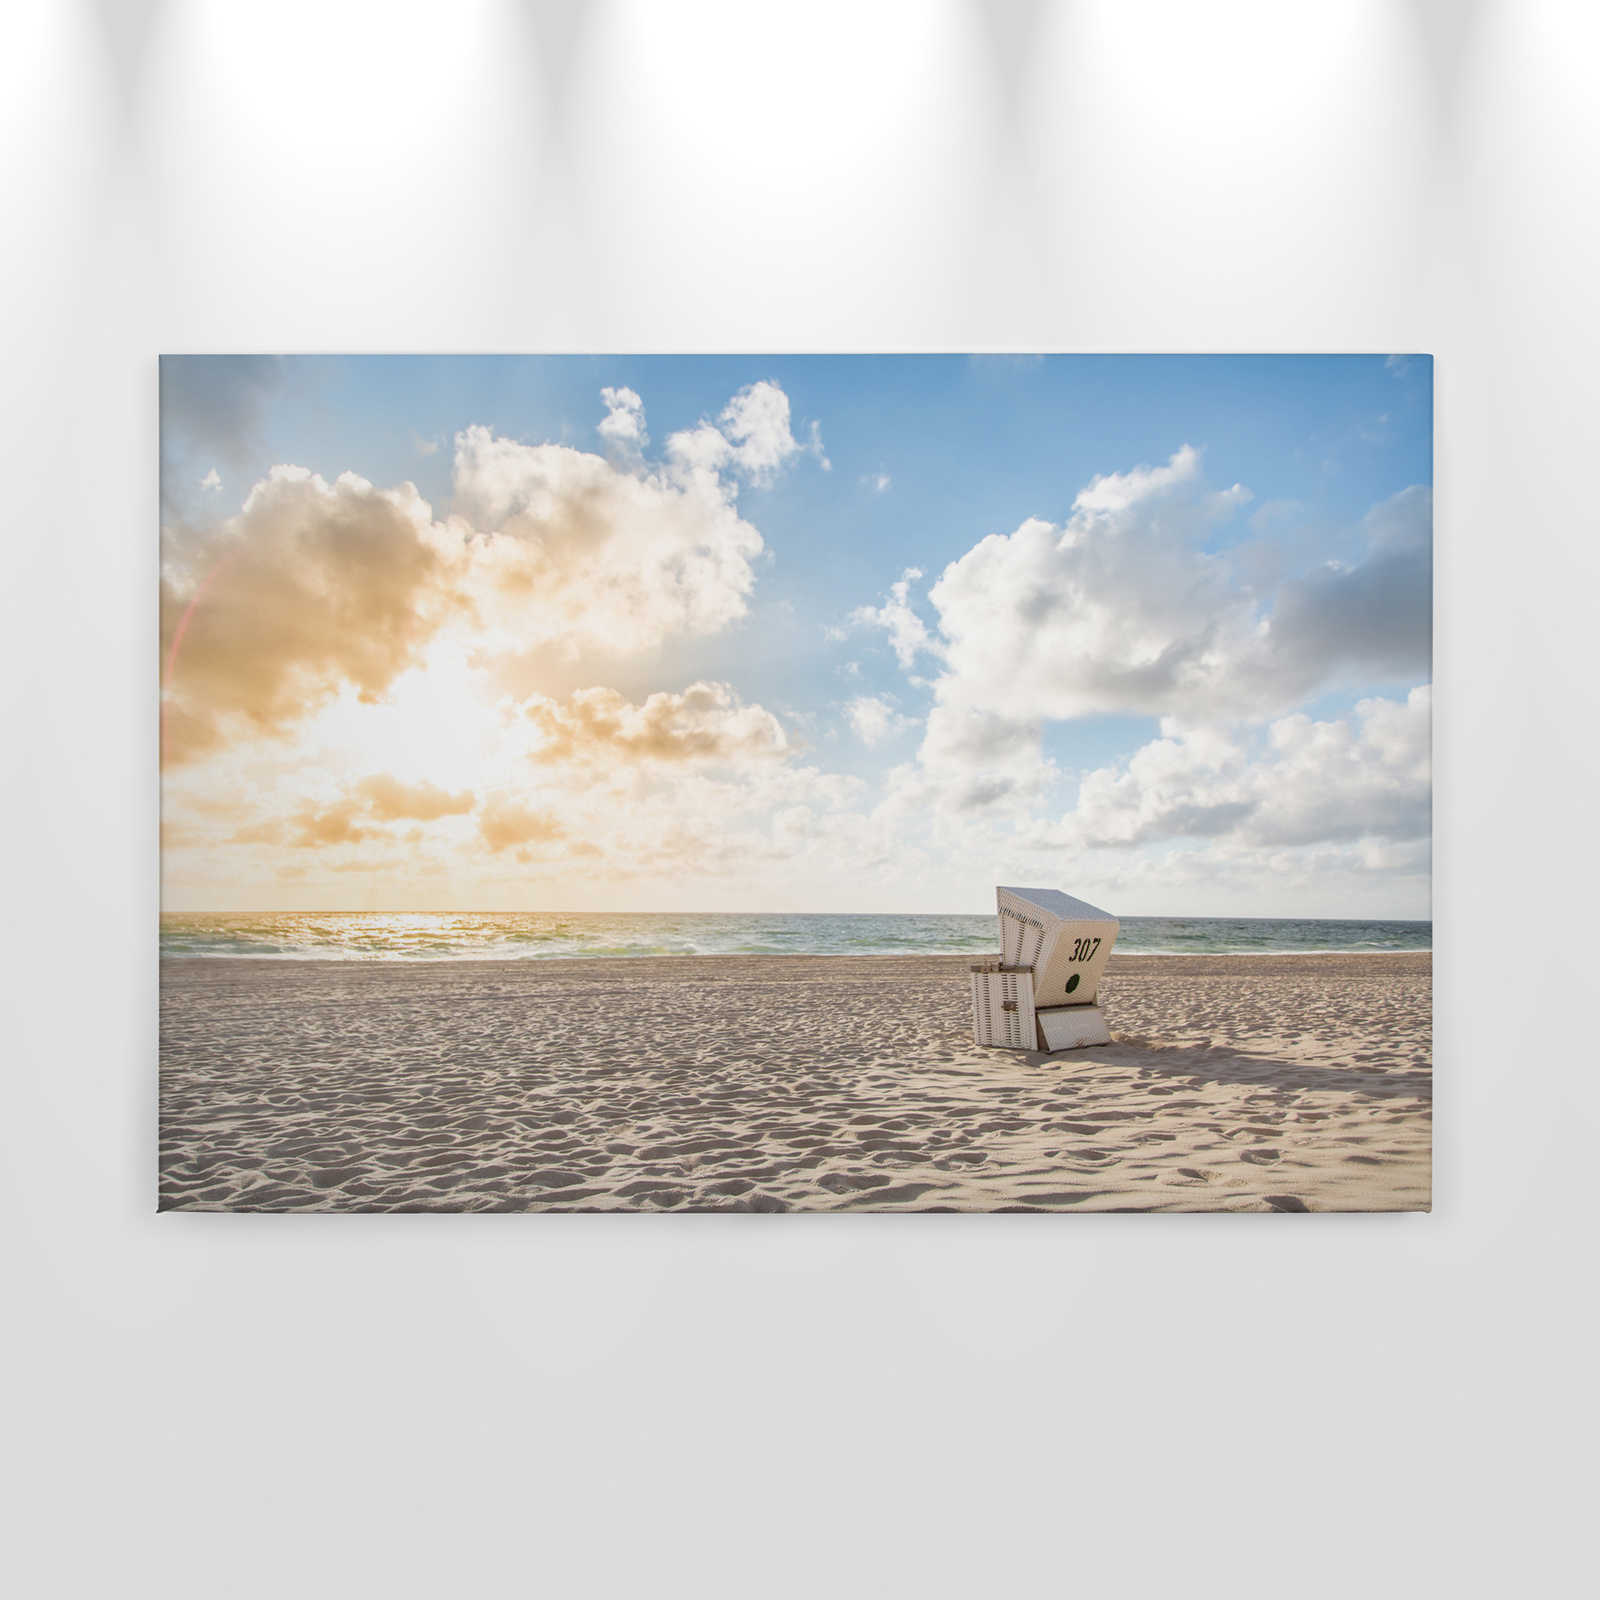             Leinwand mit Strandkorb bei Sonnenaufgang – 0,90 m x 0,60 m
        